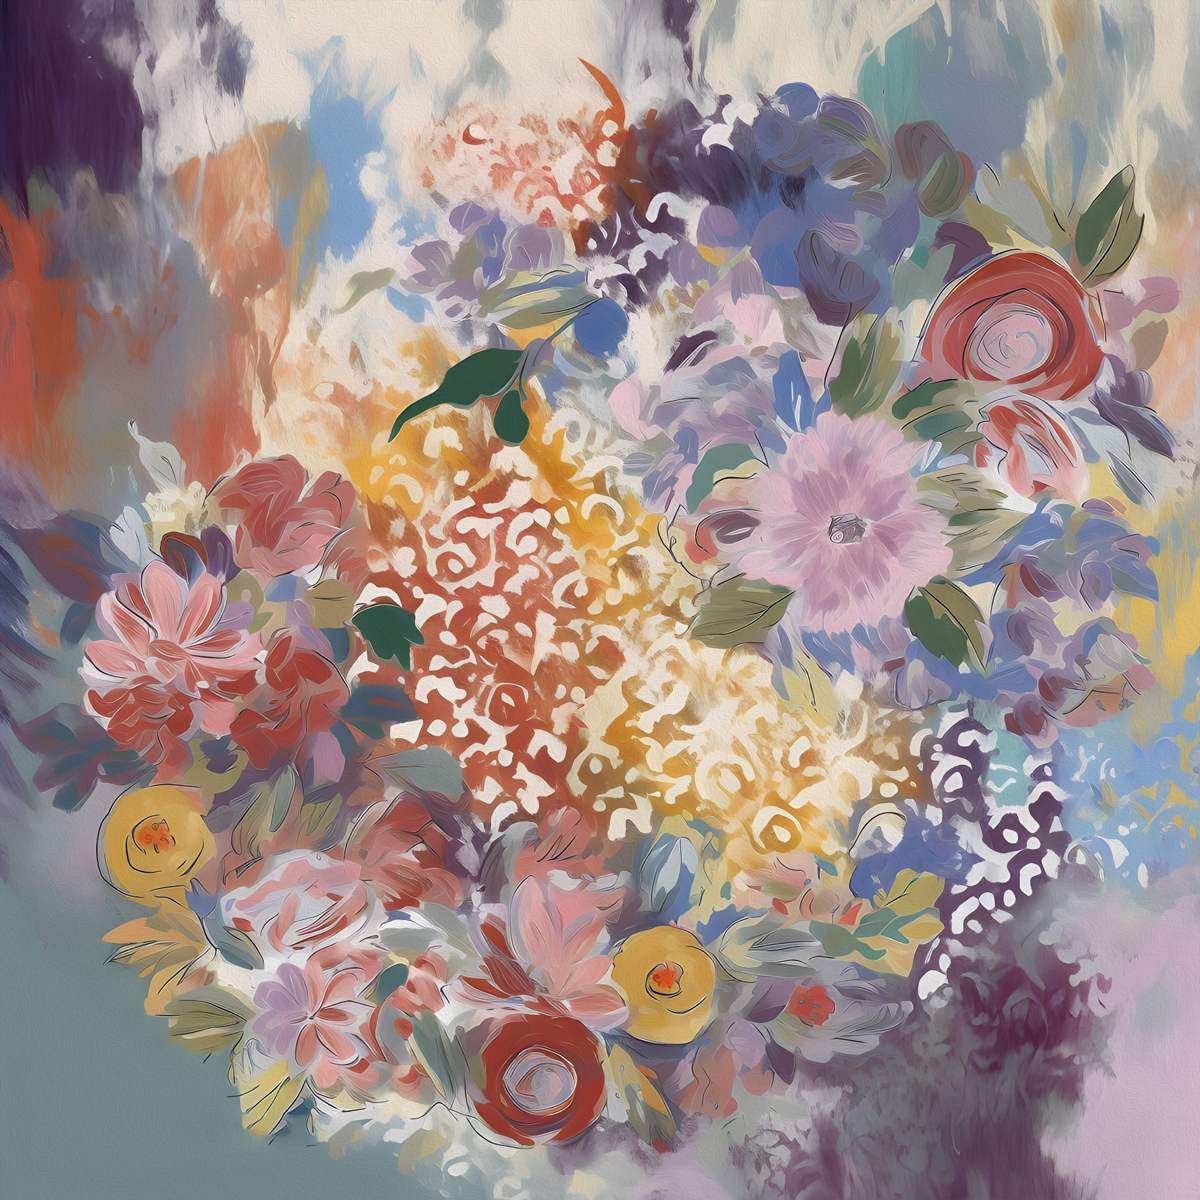  Ephemeral Elegance: 'Springtime Bouquet' Art Collection - Art Print on Canvas. Artemyst